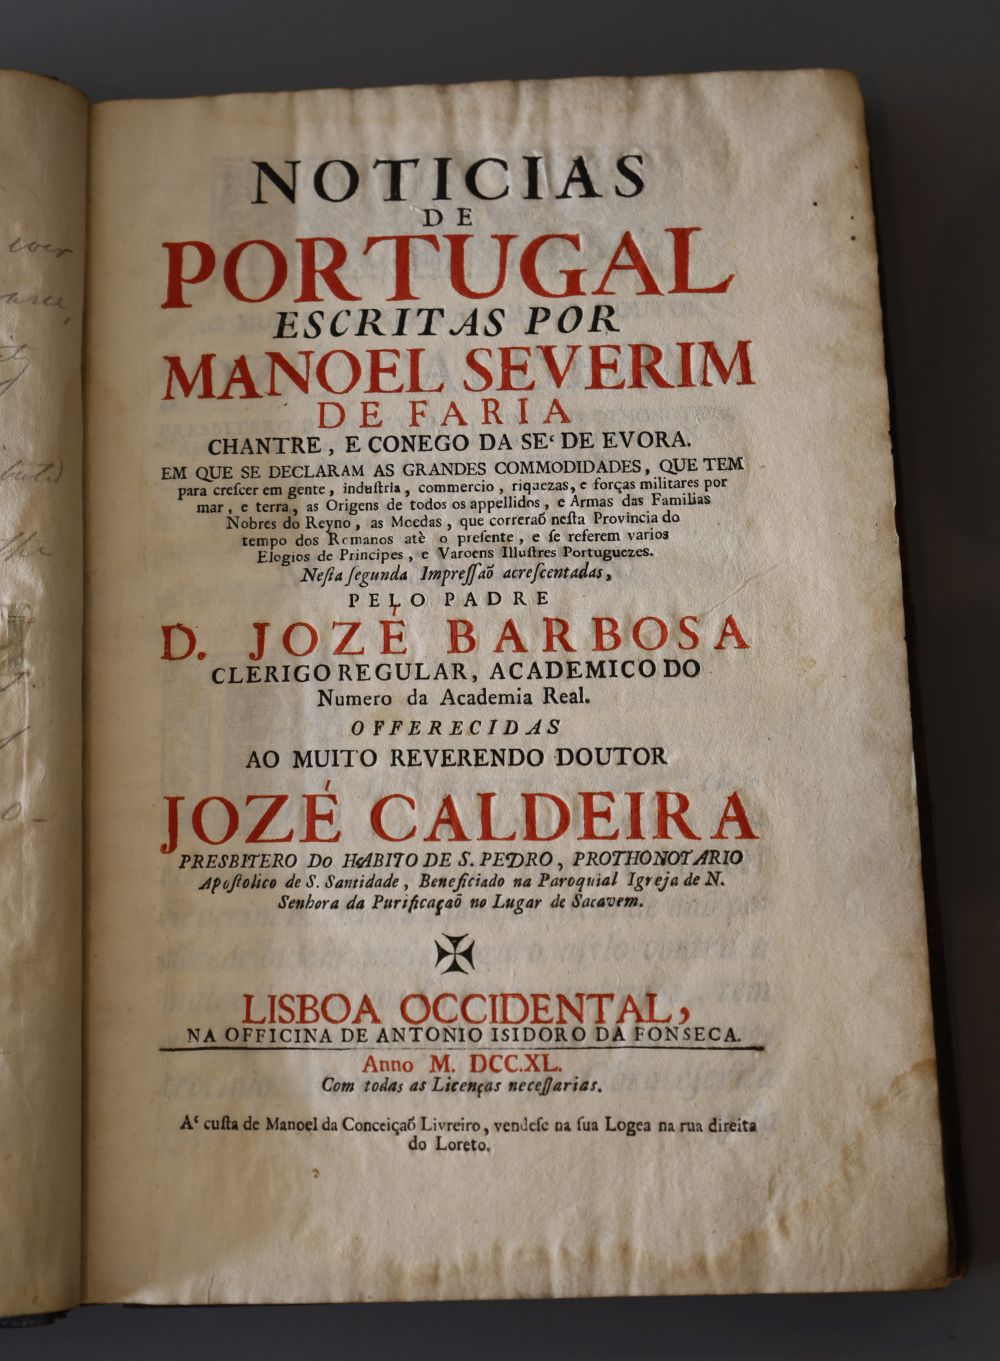 Faria, Manoel Severim de, 1583-1655 - Noticias de Portugal, 2nd edition, calf, quarto, pencil writings to obverse of half title, later